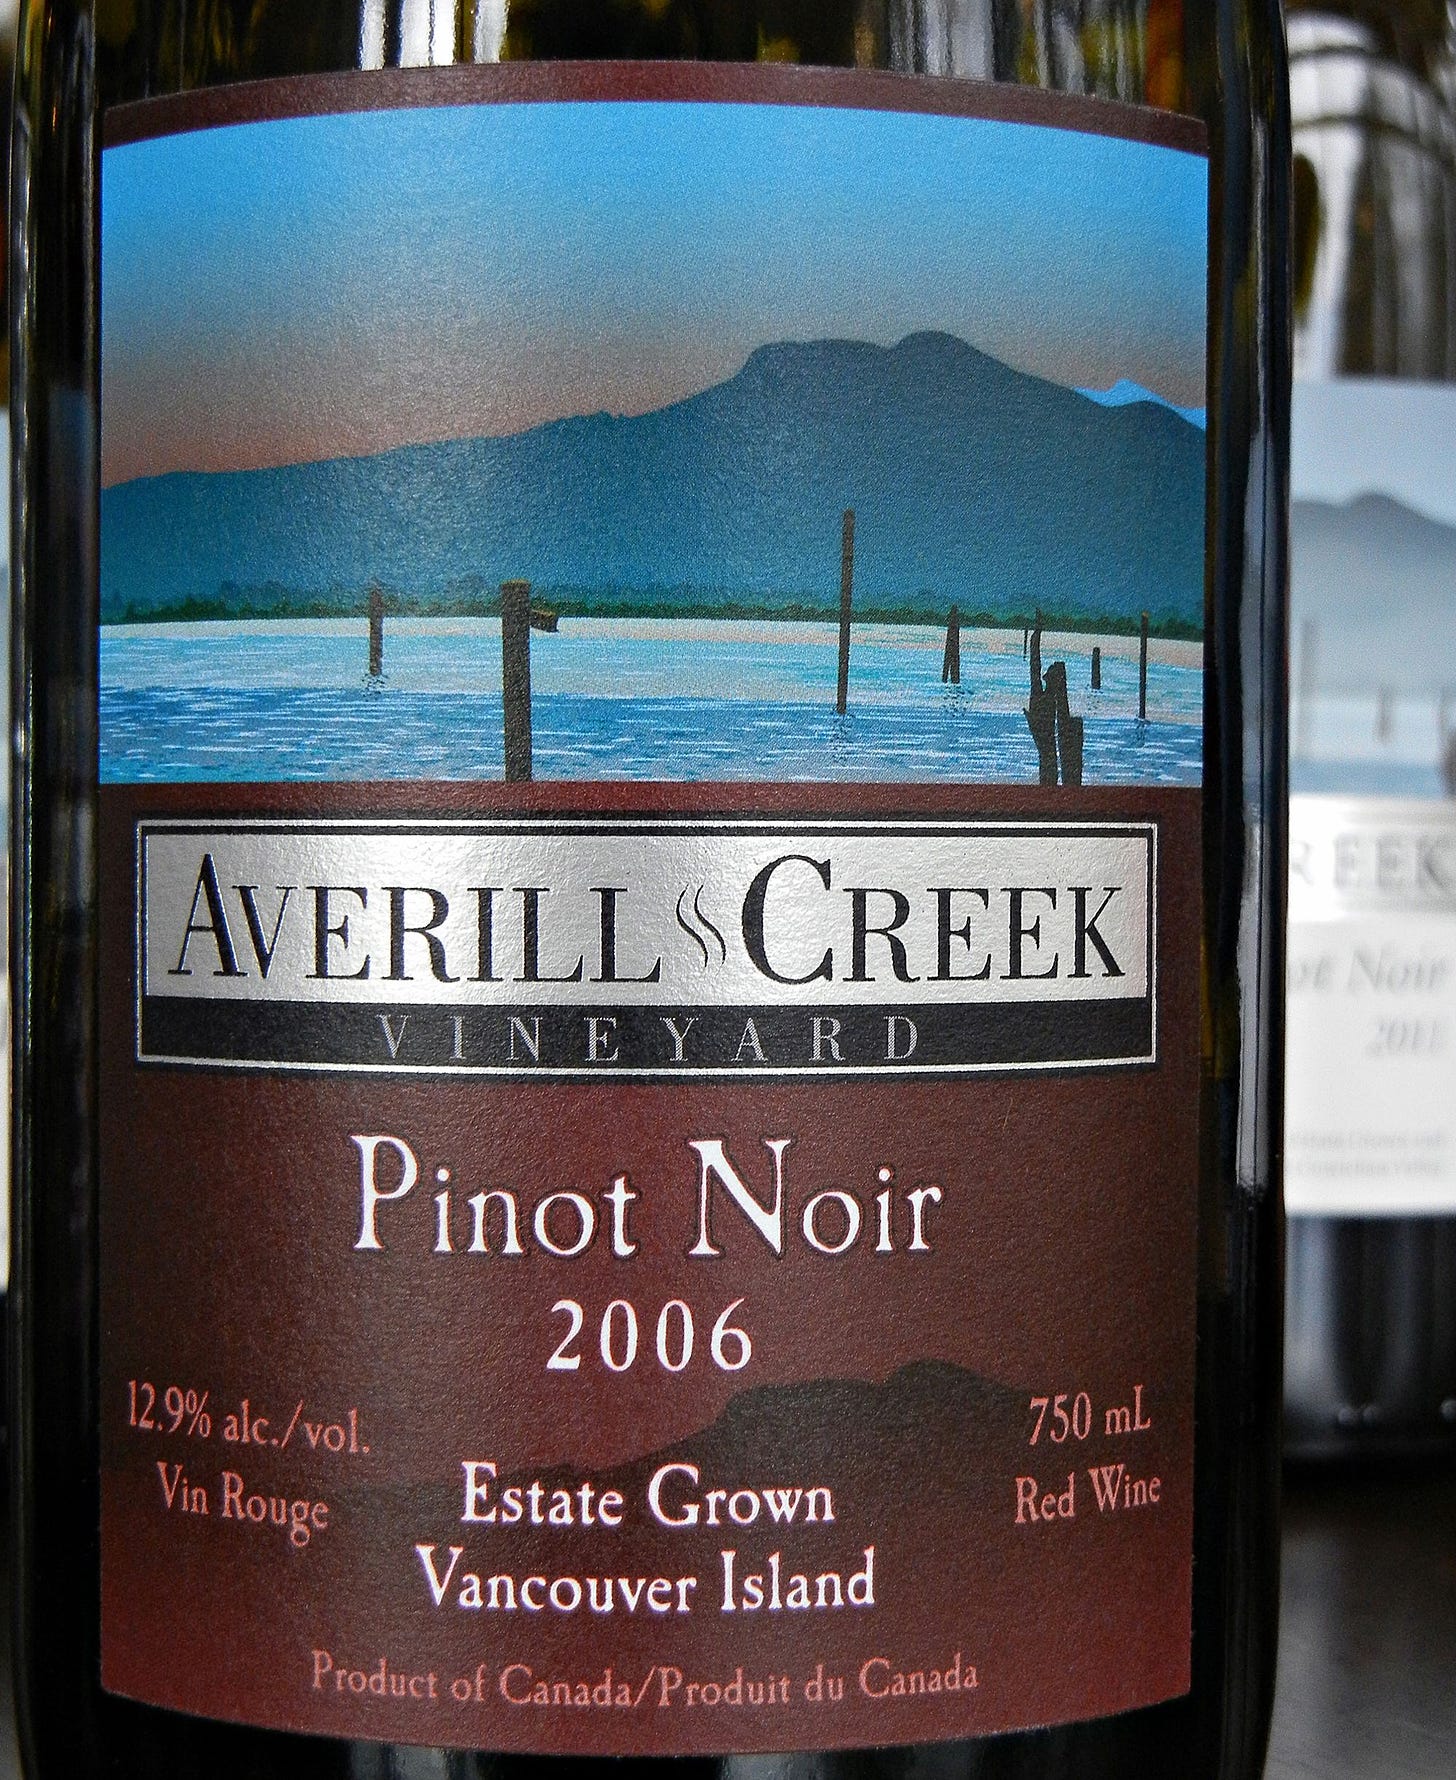 Averill Creek Pinot Noir 2006 Label - BC Pinot Noir Tasting Review 24